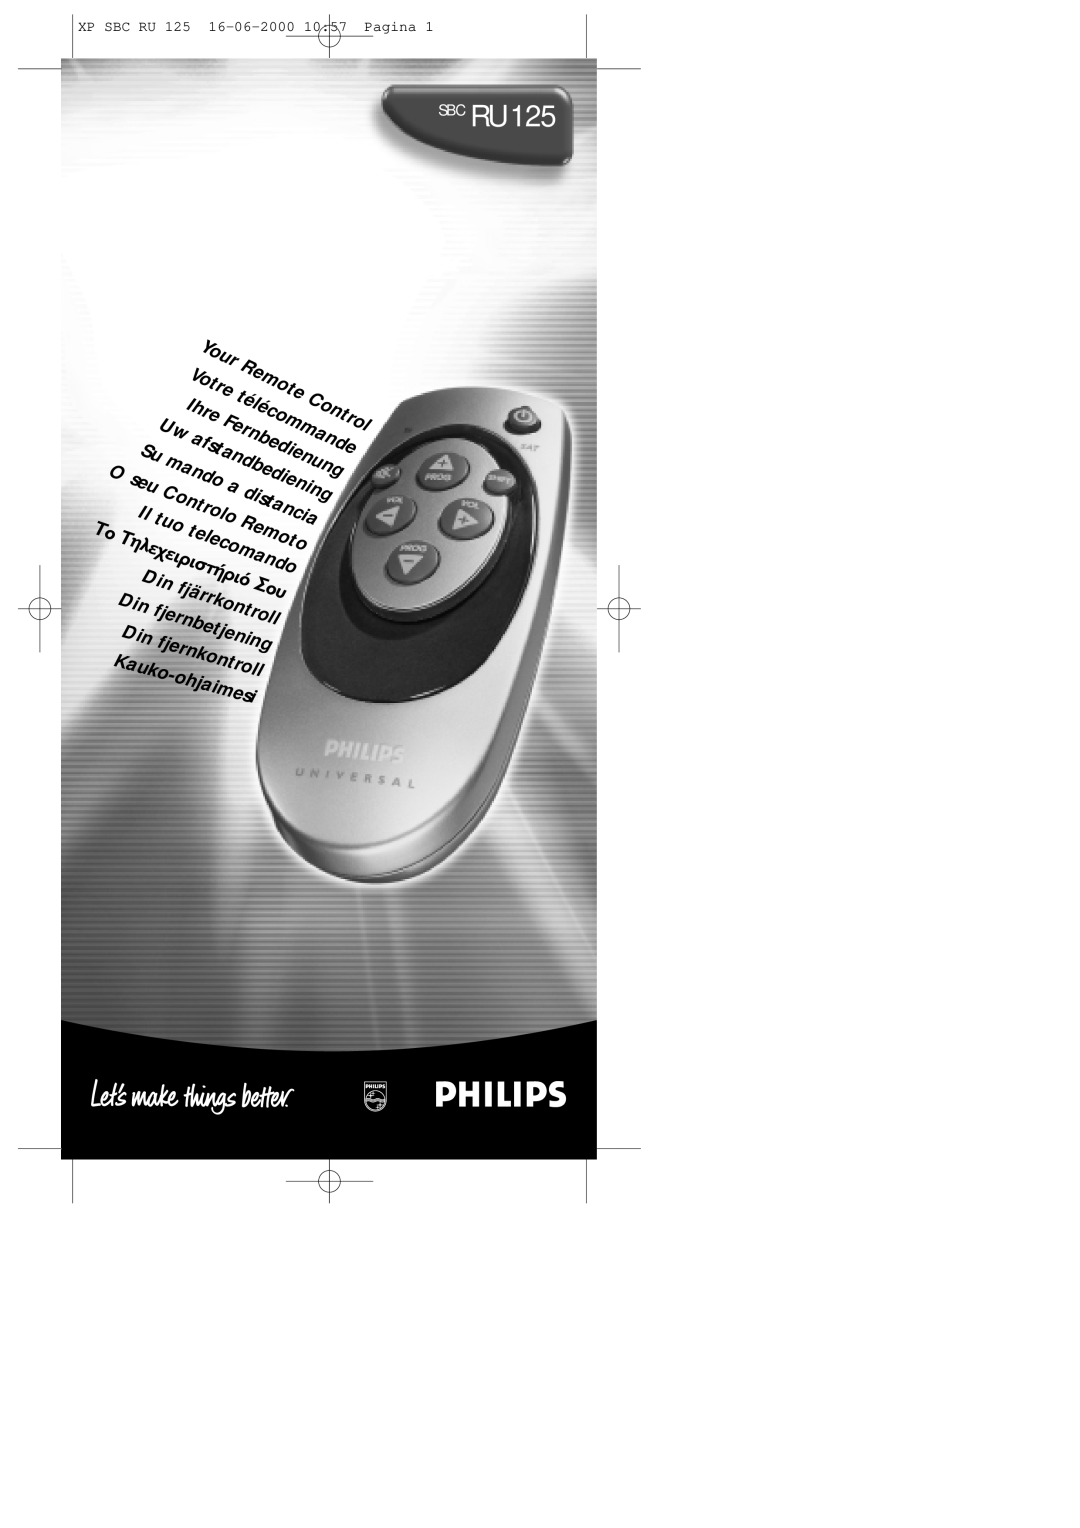 Philips manual Control, Fernbedienung, mando, distancia, XP SBC RU 125 16-06-200010 57 Pagina, SBC RU125, fjernkontroll 